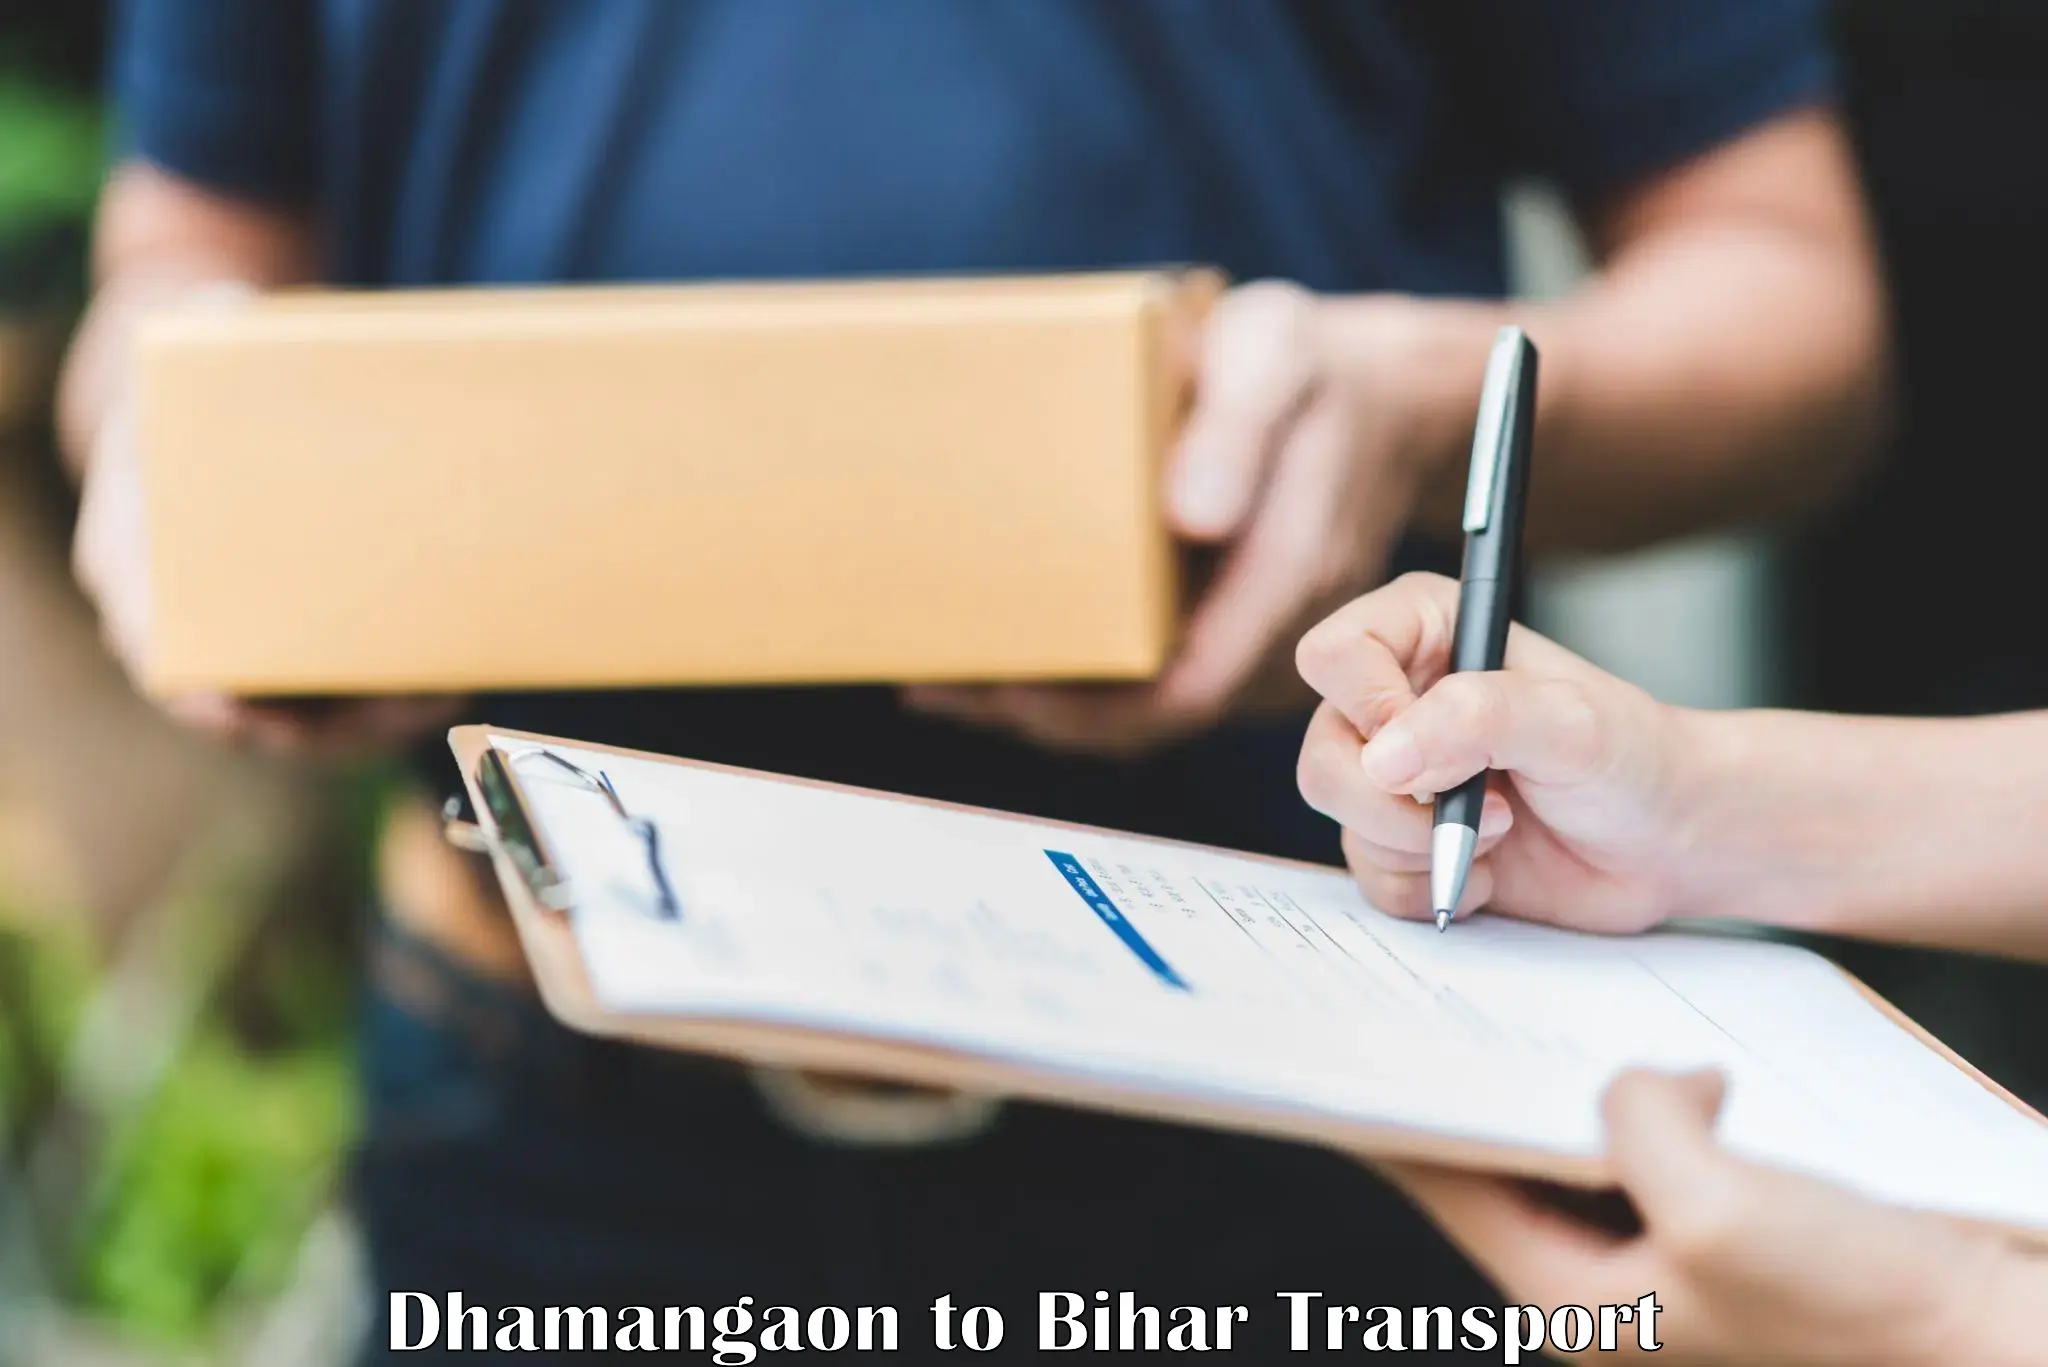 Online transport service Dhamangaon to Darbhanga